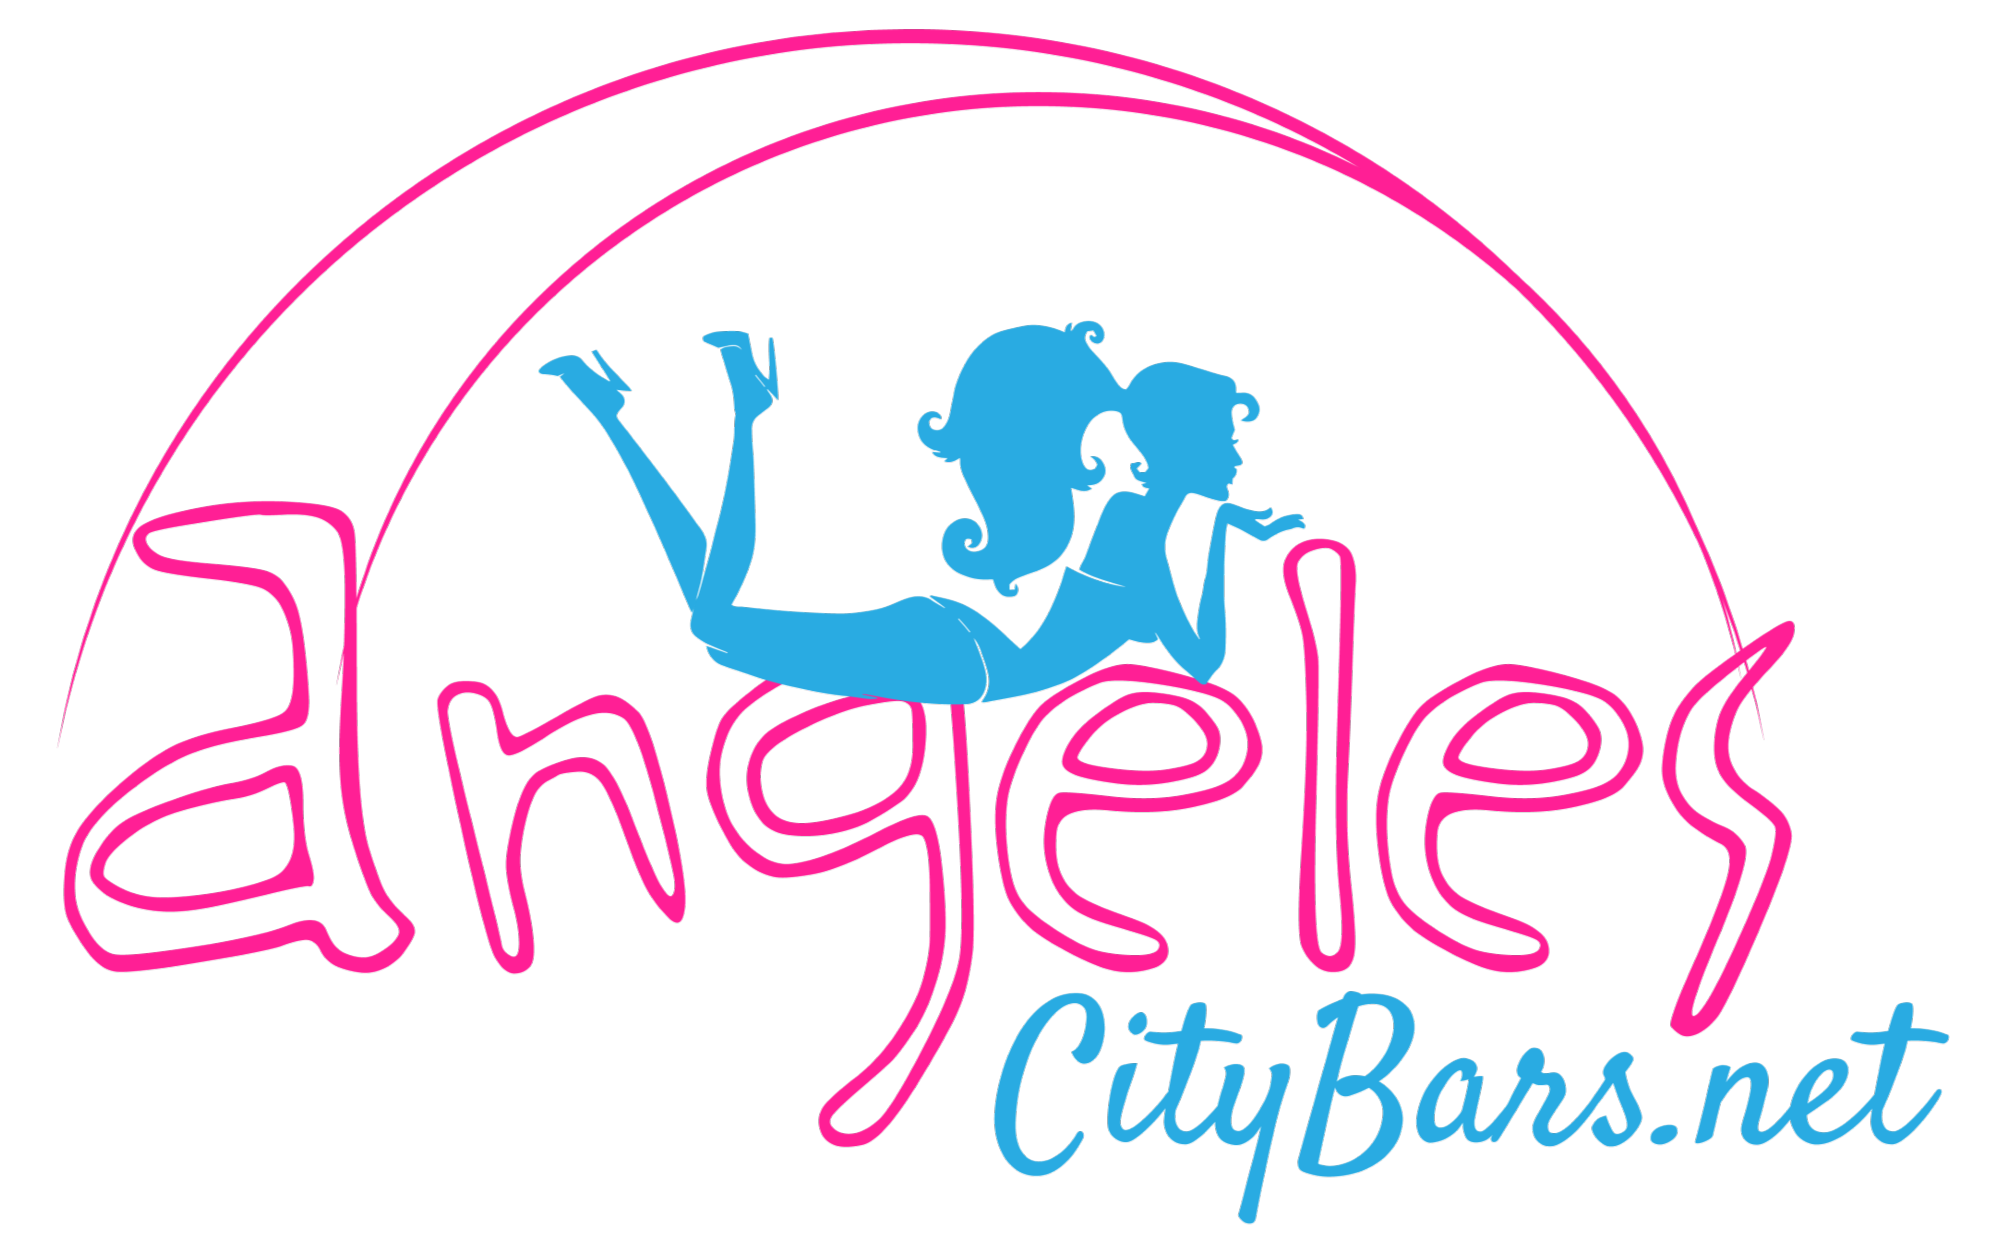 Angeles City Bars